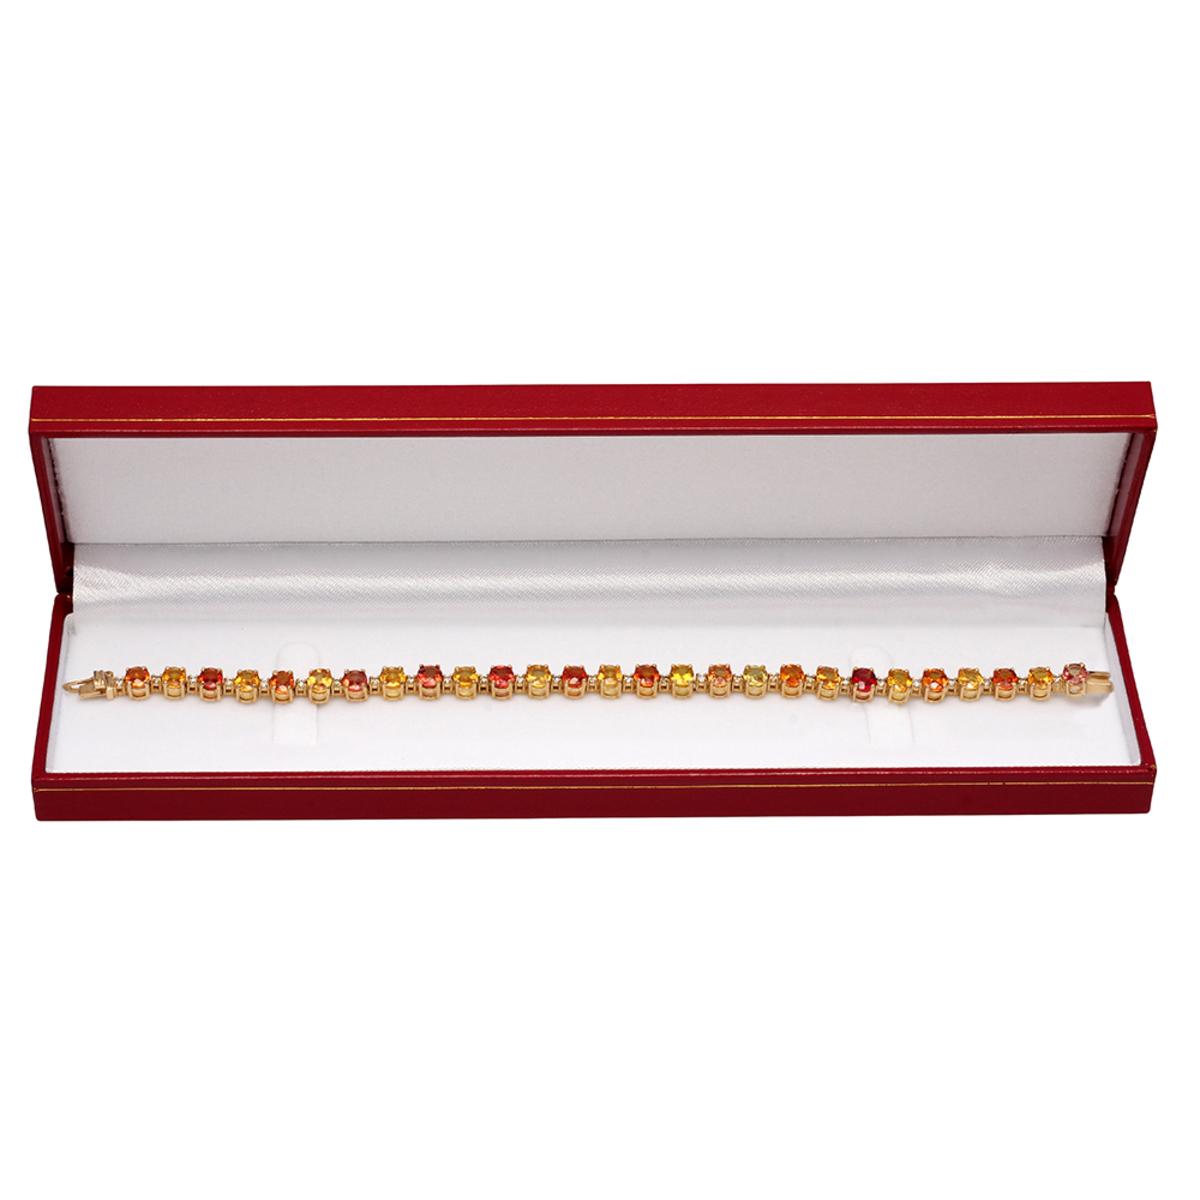 14k Yellow Gold 20.52ct Sapphire 1.09ct Diamond Bracelet